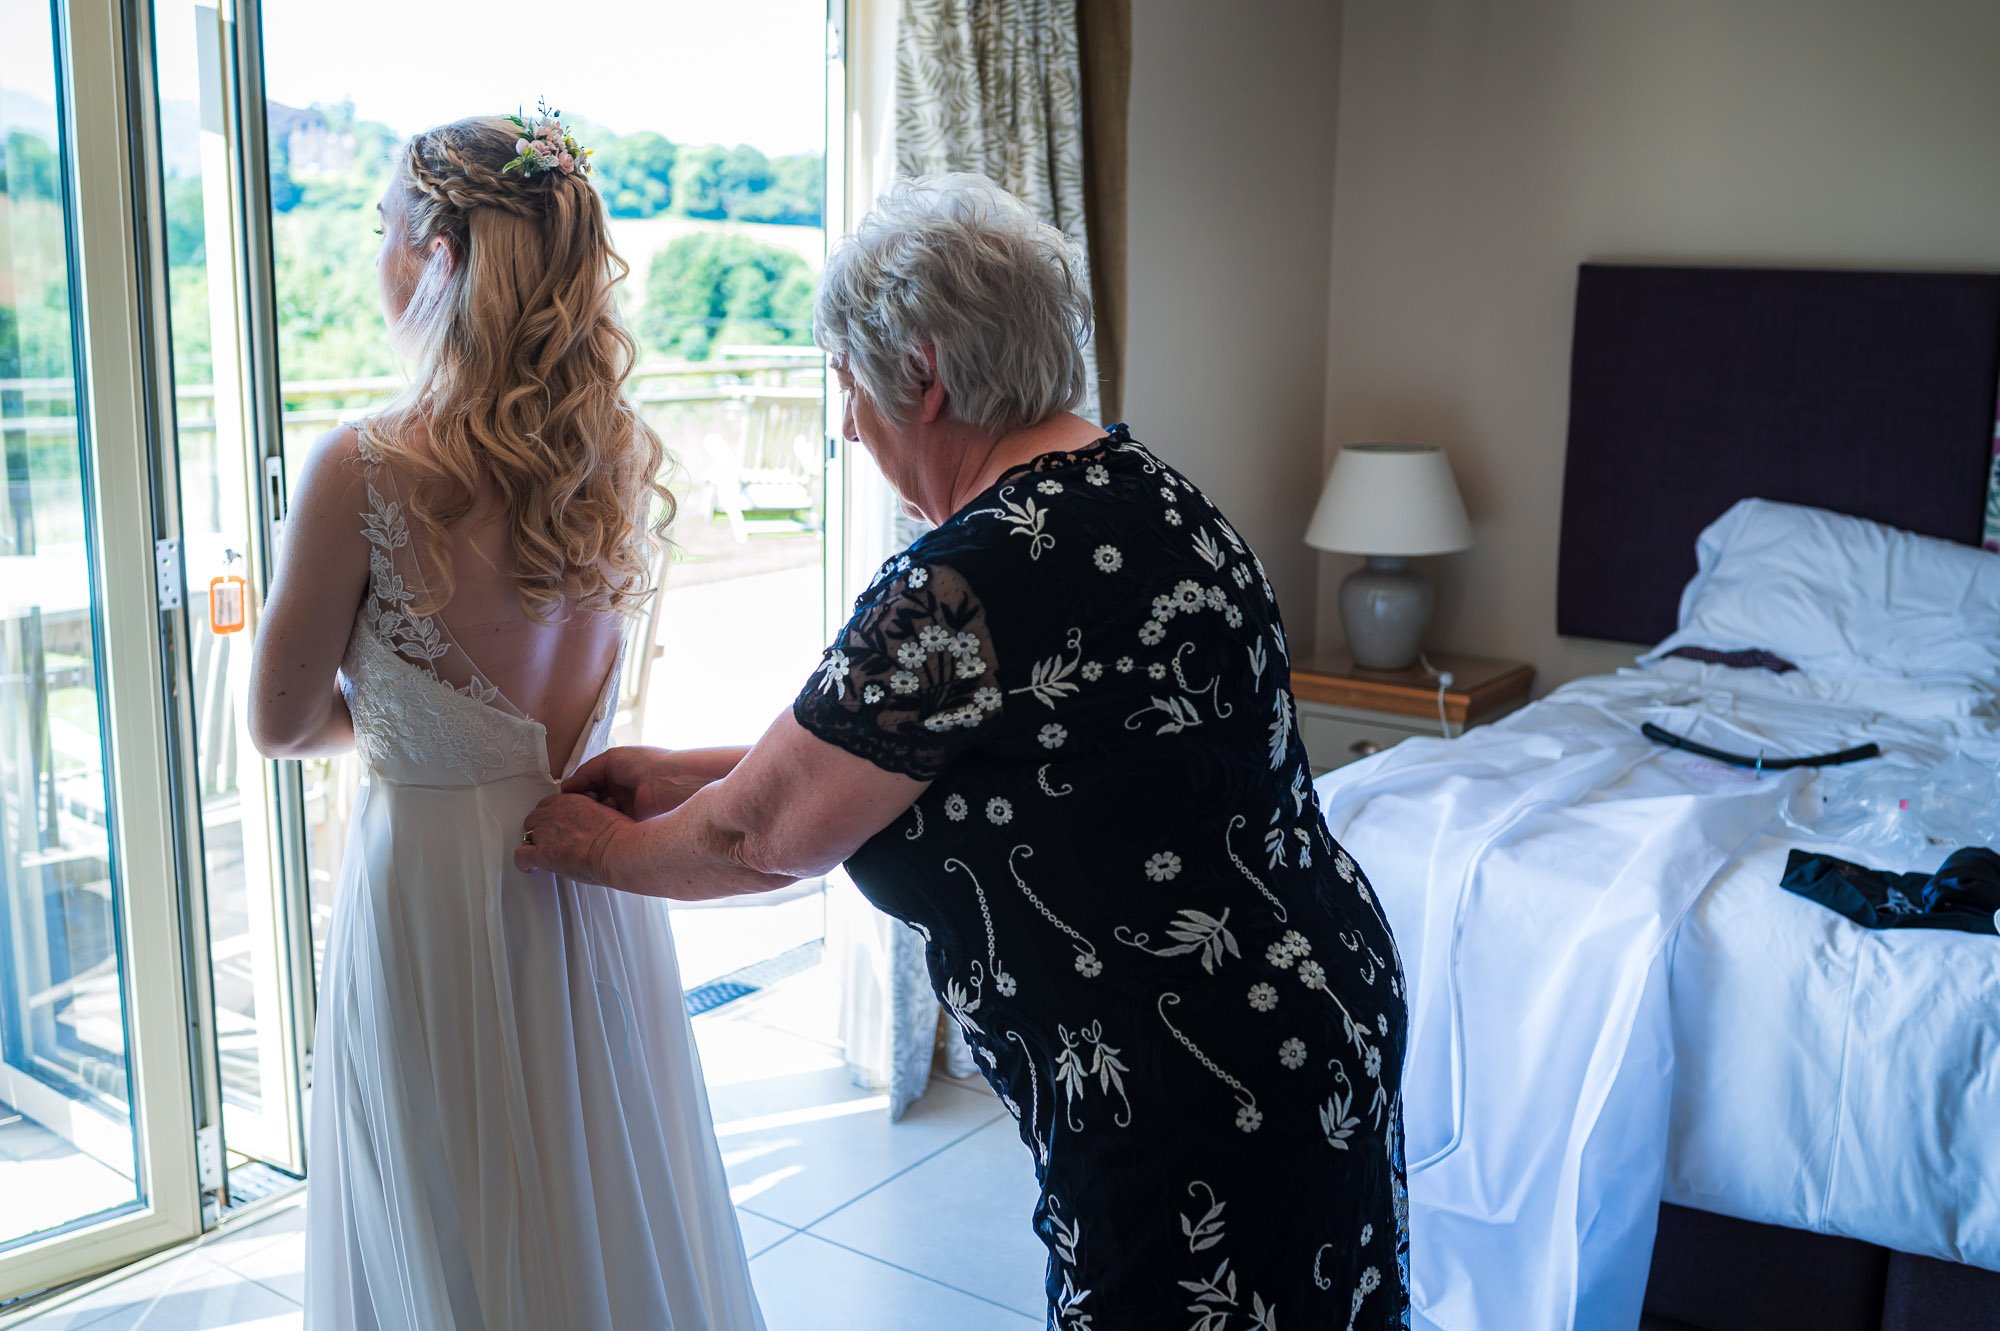 Mum doing up the bride's dress